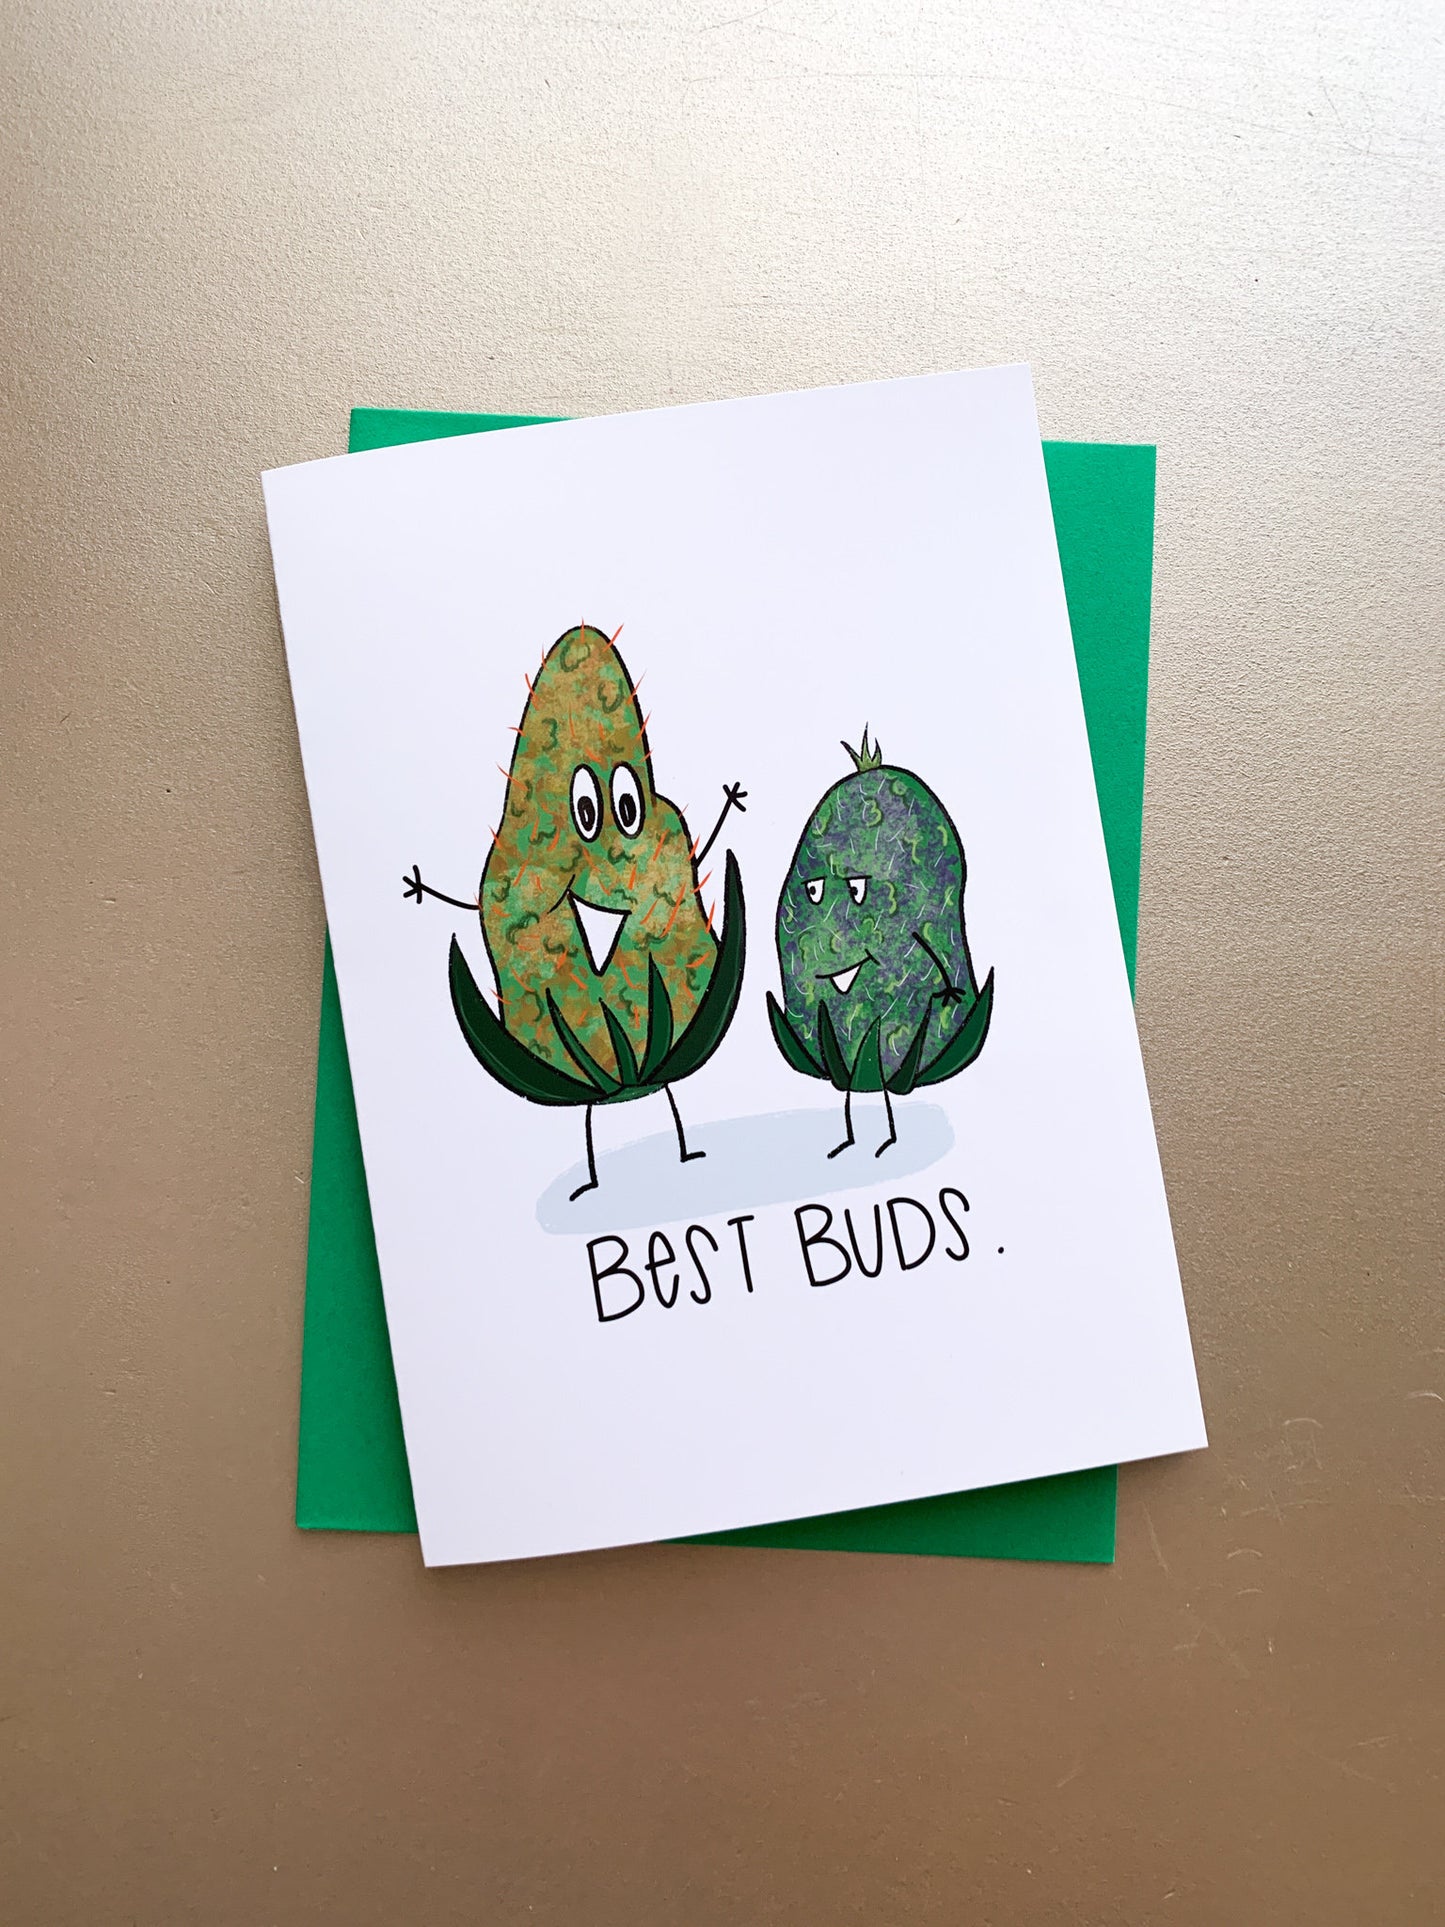 Handmade Best Buds Cannabis Friendship Card for 420 by StoneDonut Design